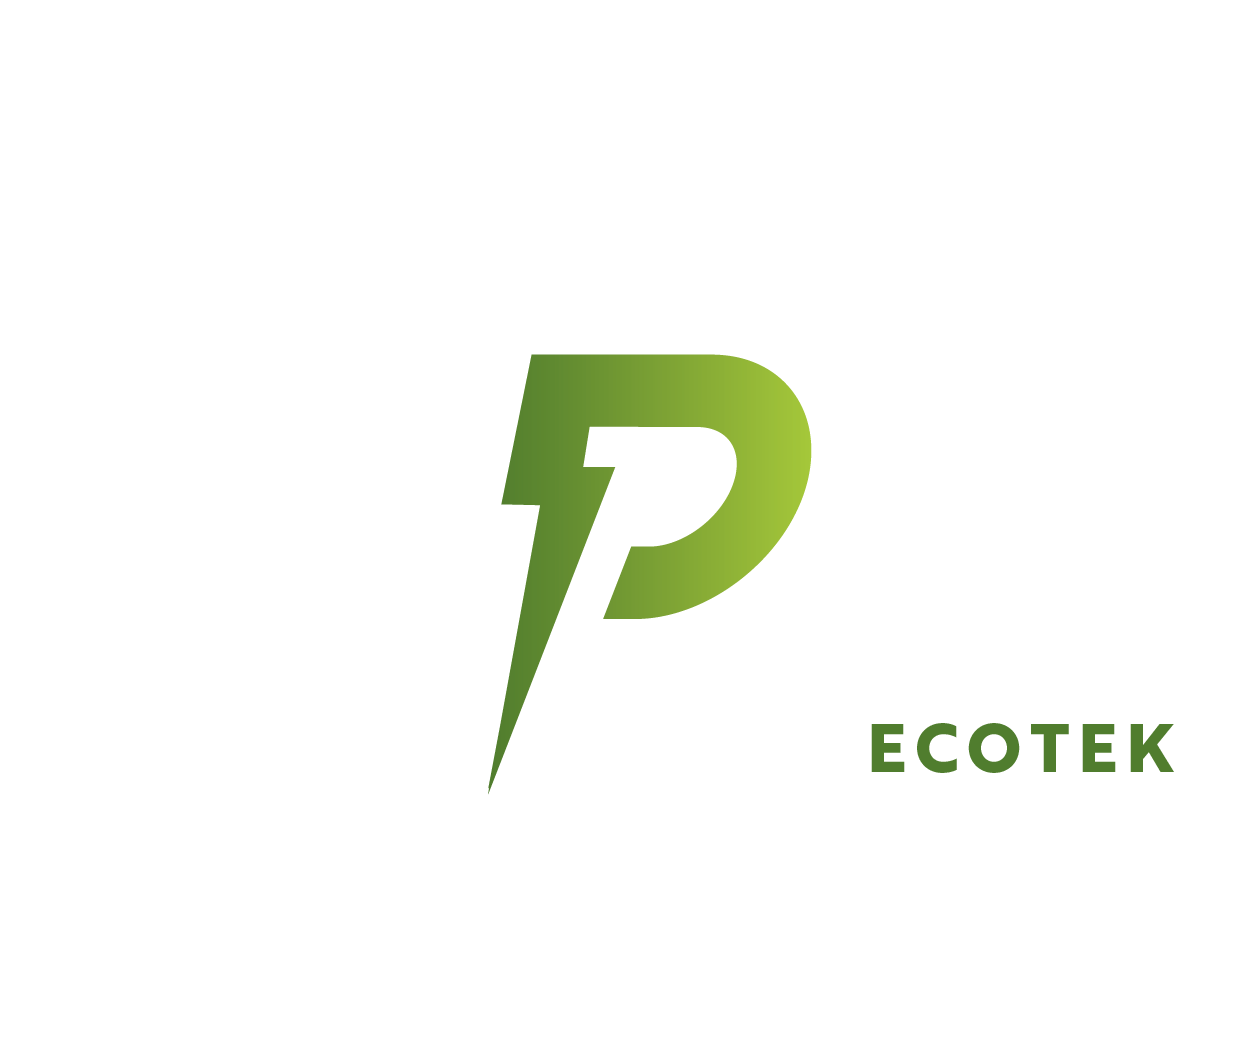 EPM_ecotek_white